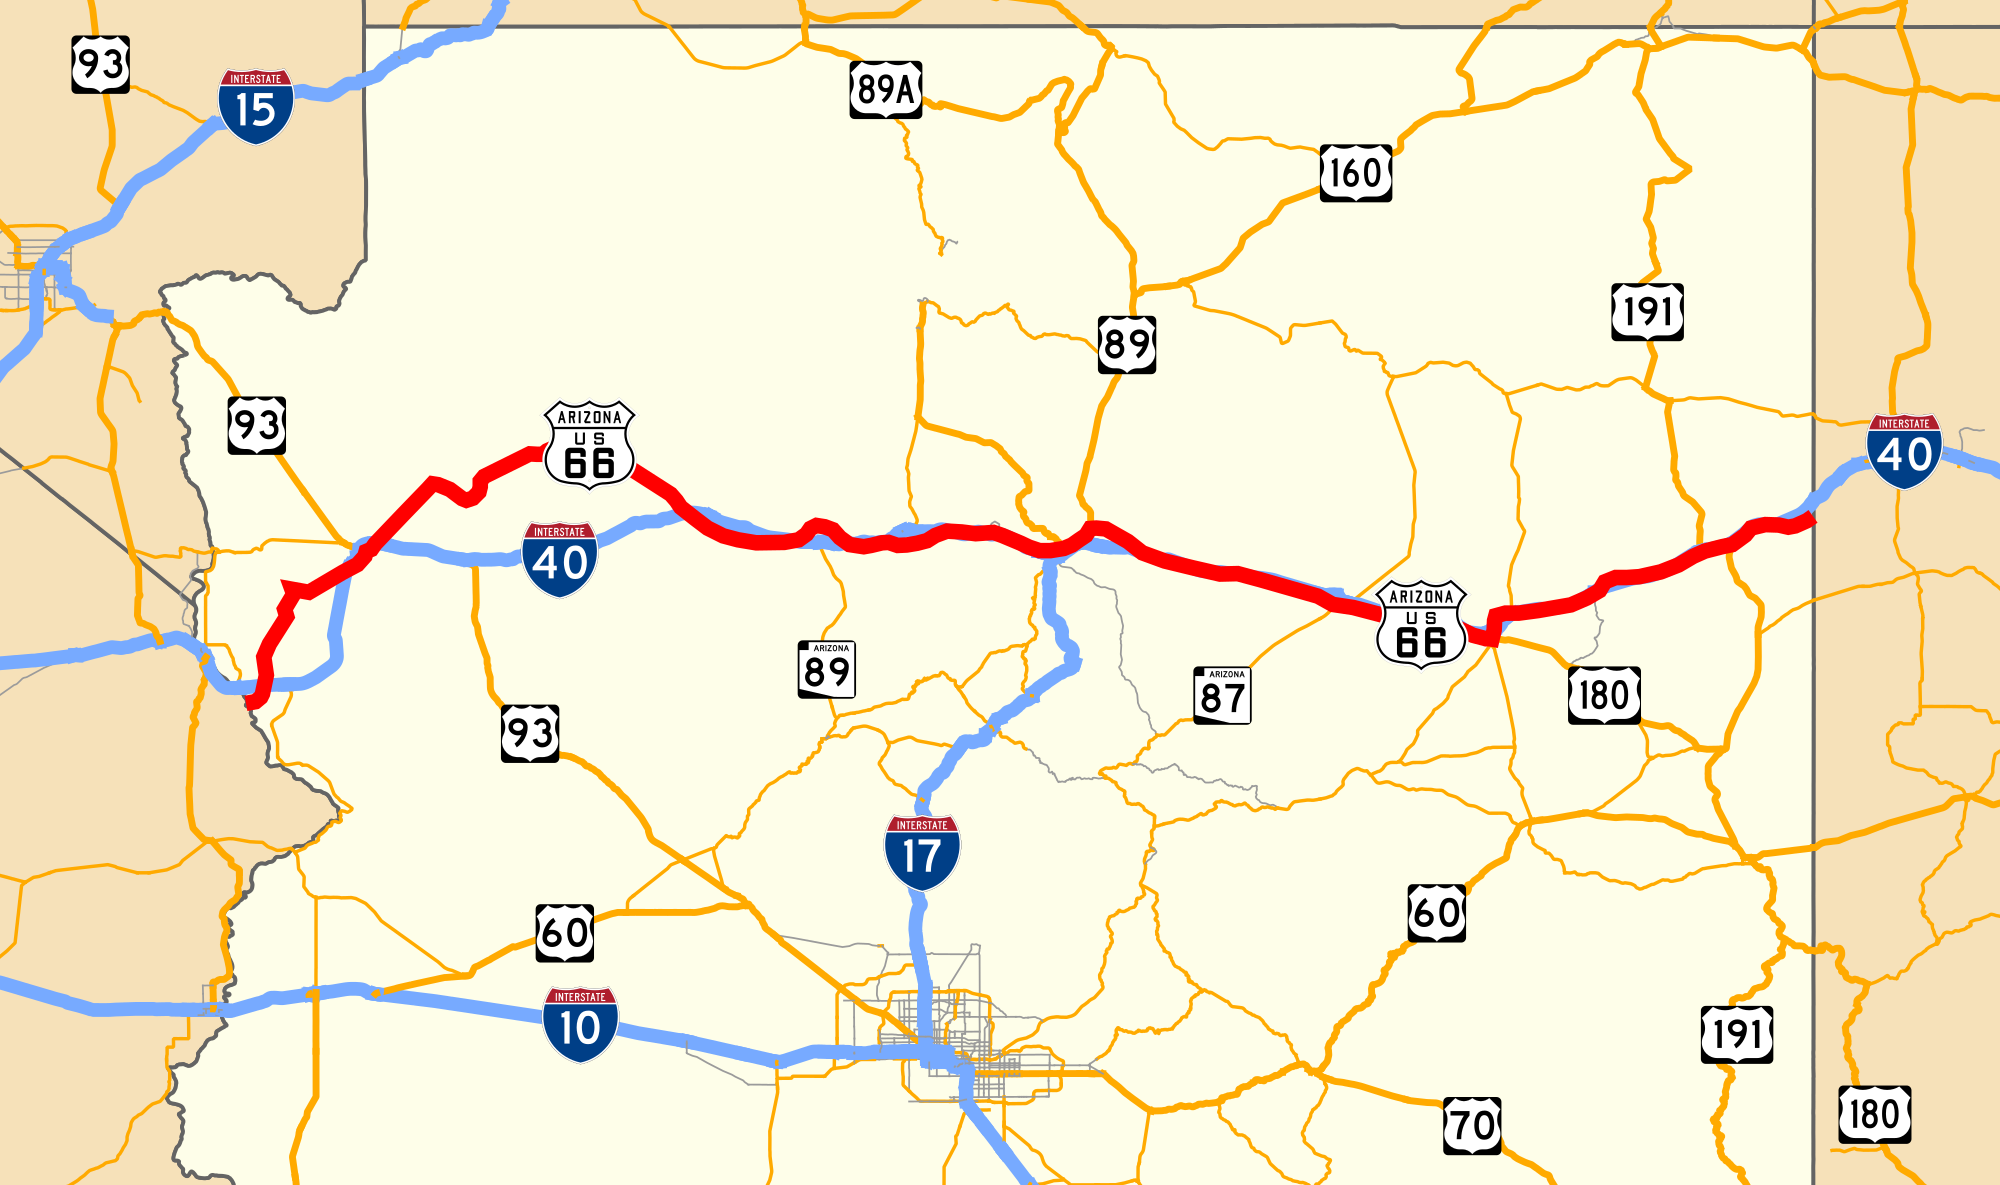 u.s. route 66 in arizona - wikipedia